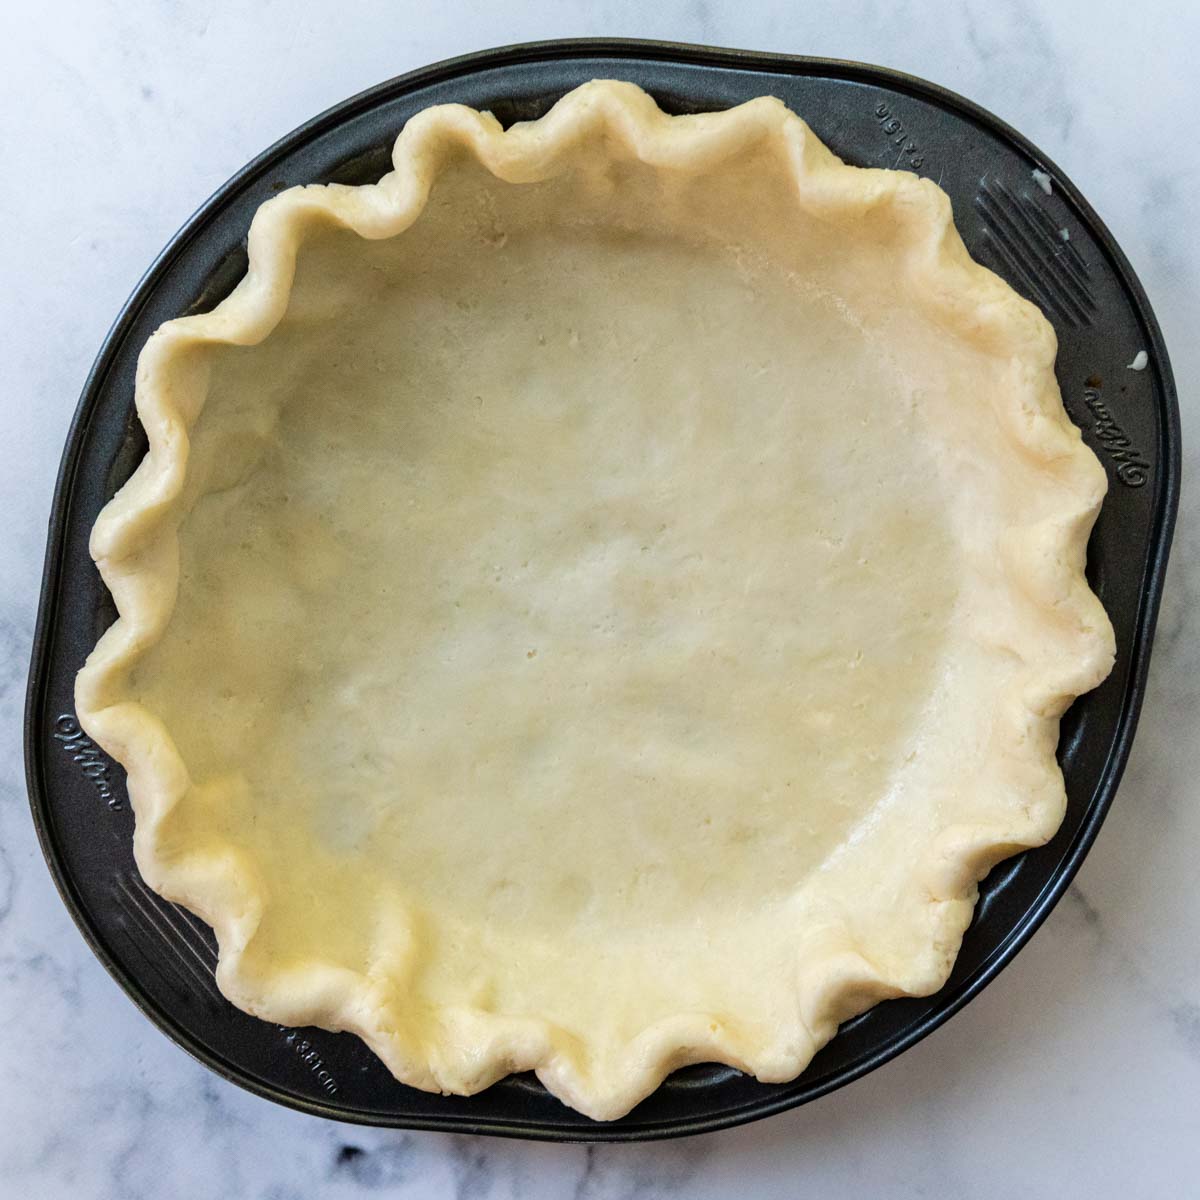 an unbaked pie crust in a metal pan.